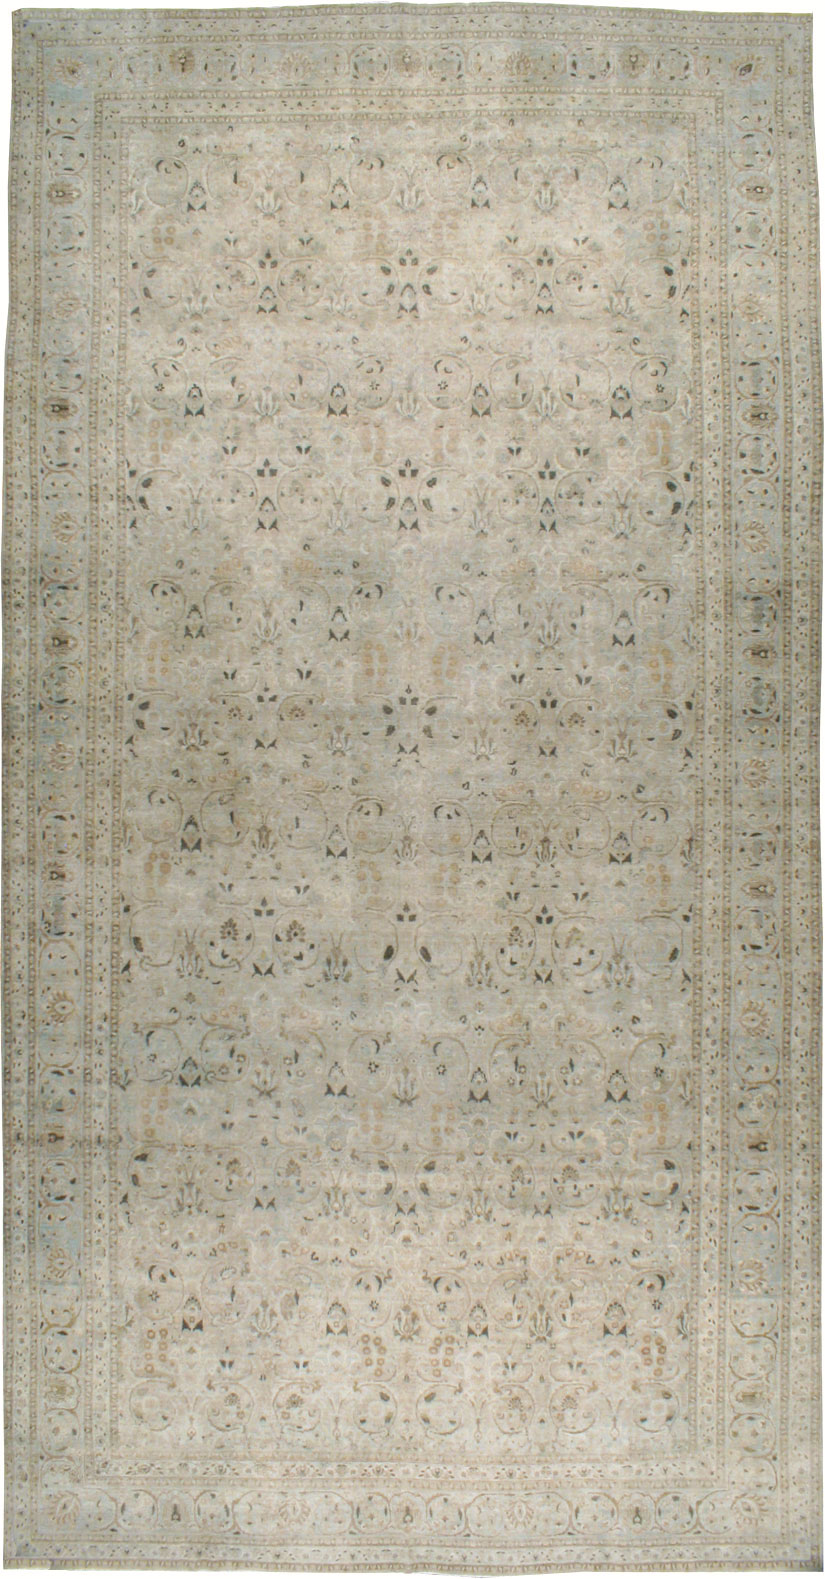 Antique tabriz Carpet - # 56022